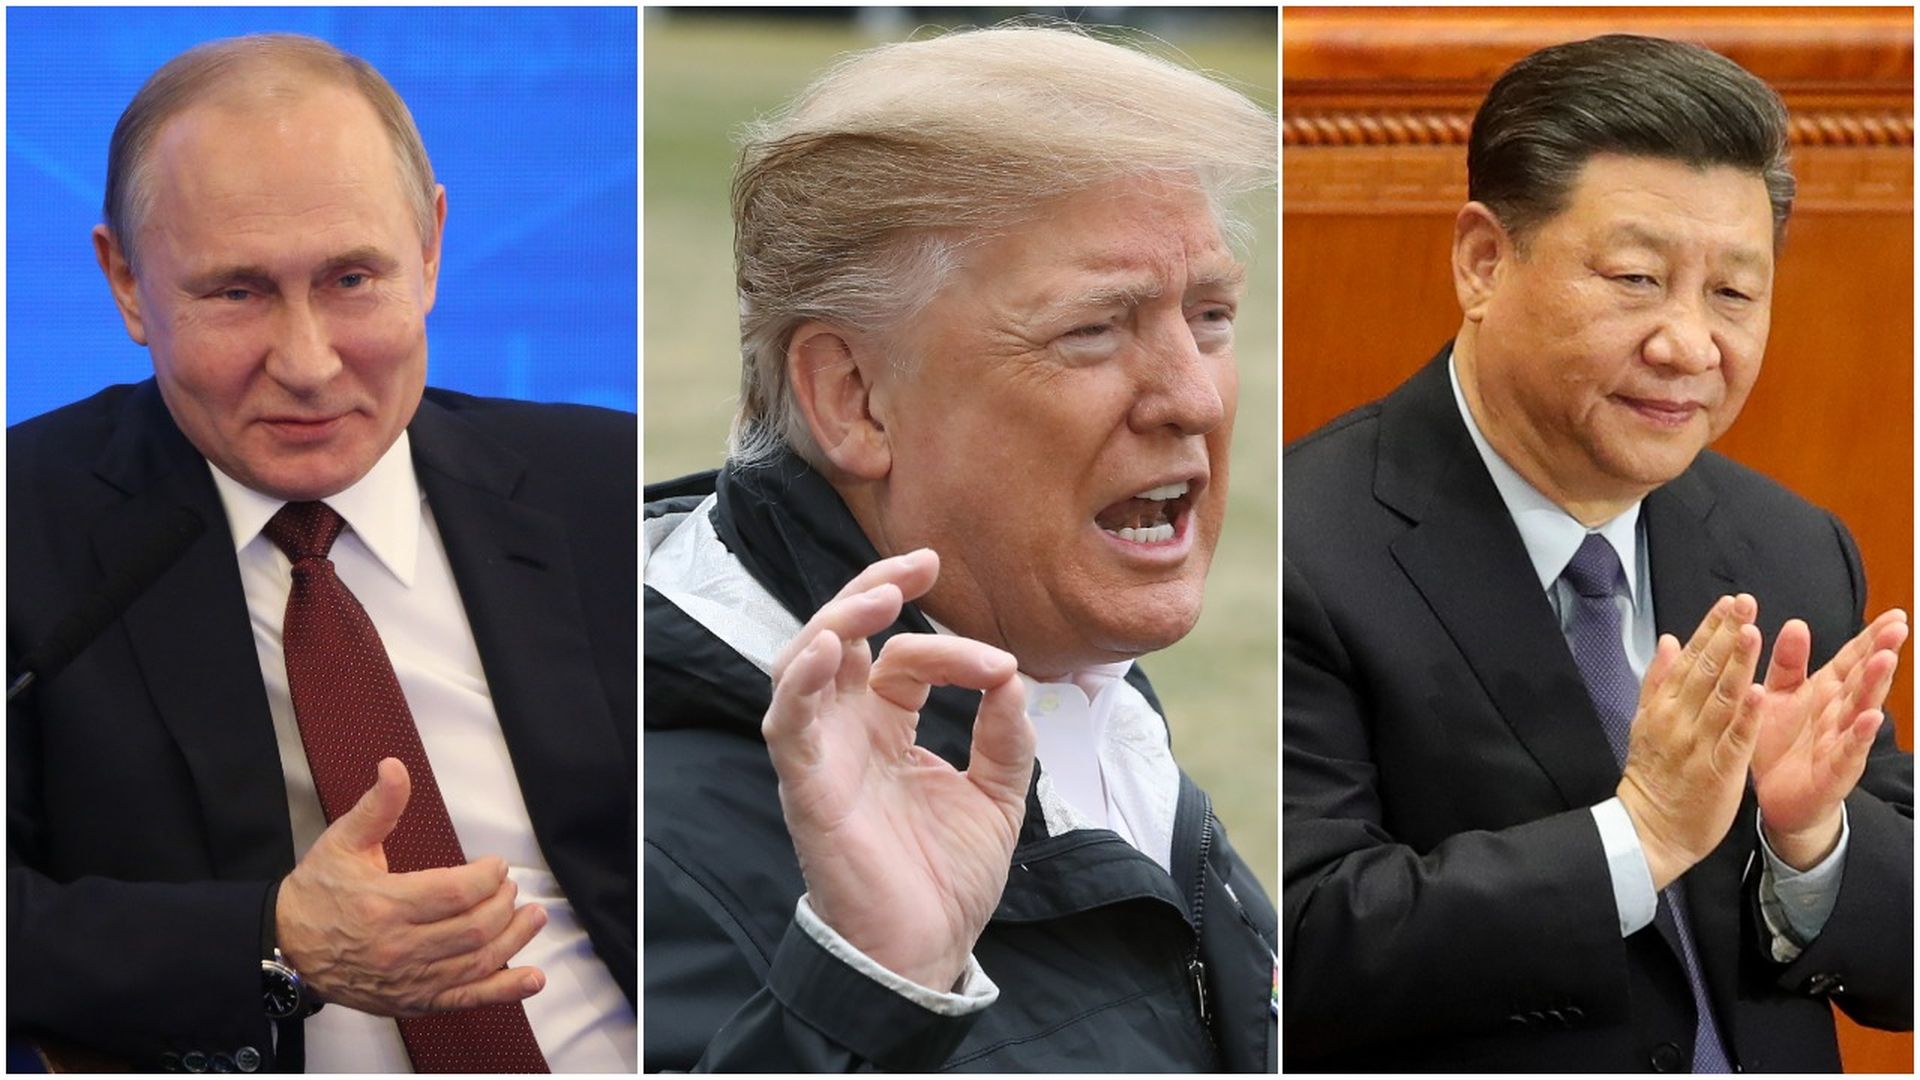 A three-way split screen of President Trump, Vladimir Putin and Xi Jinping. 